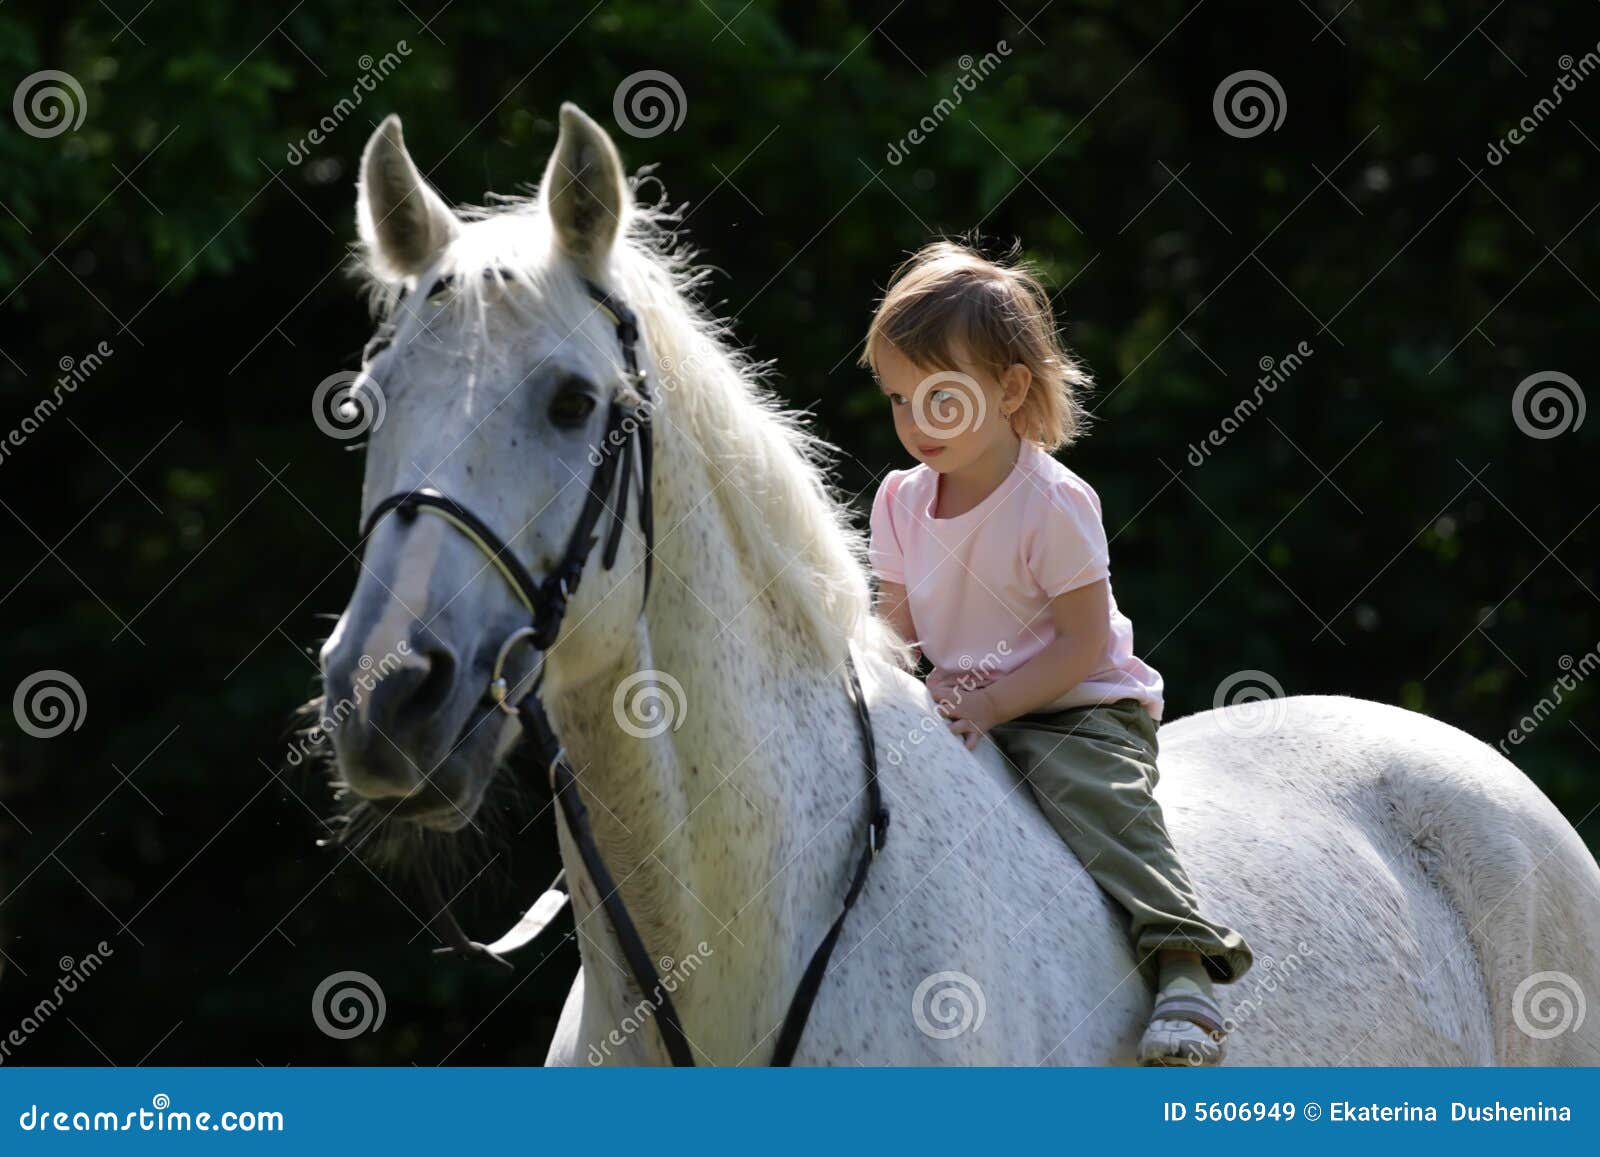 beauty intent girl riding bareback by gray horse